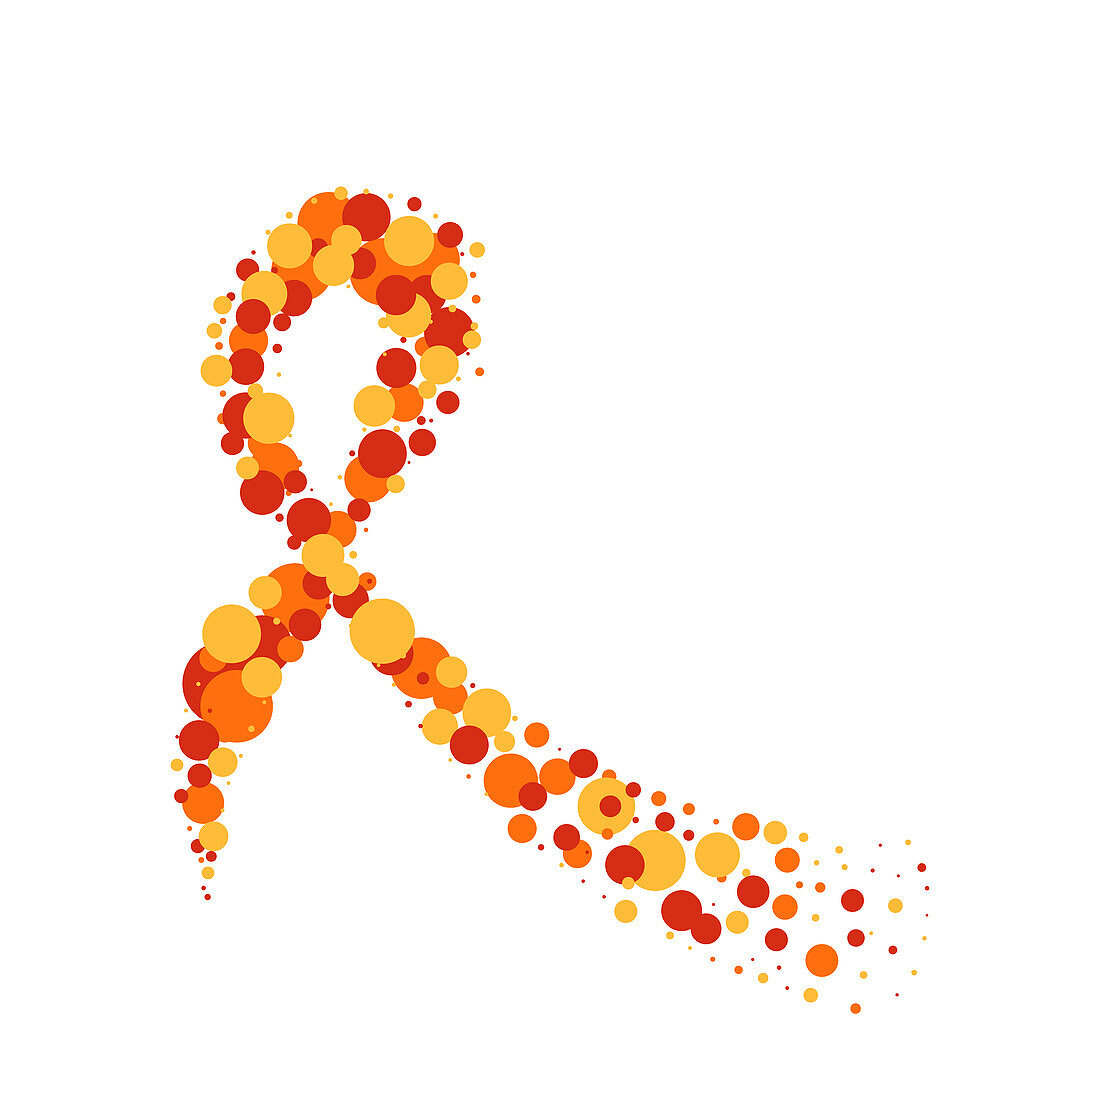 Multiple sclerosis awareness ribbon, conceptual illustration